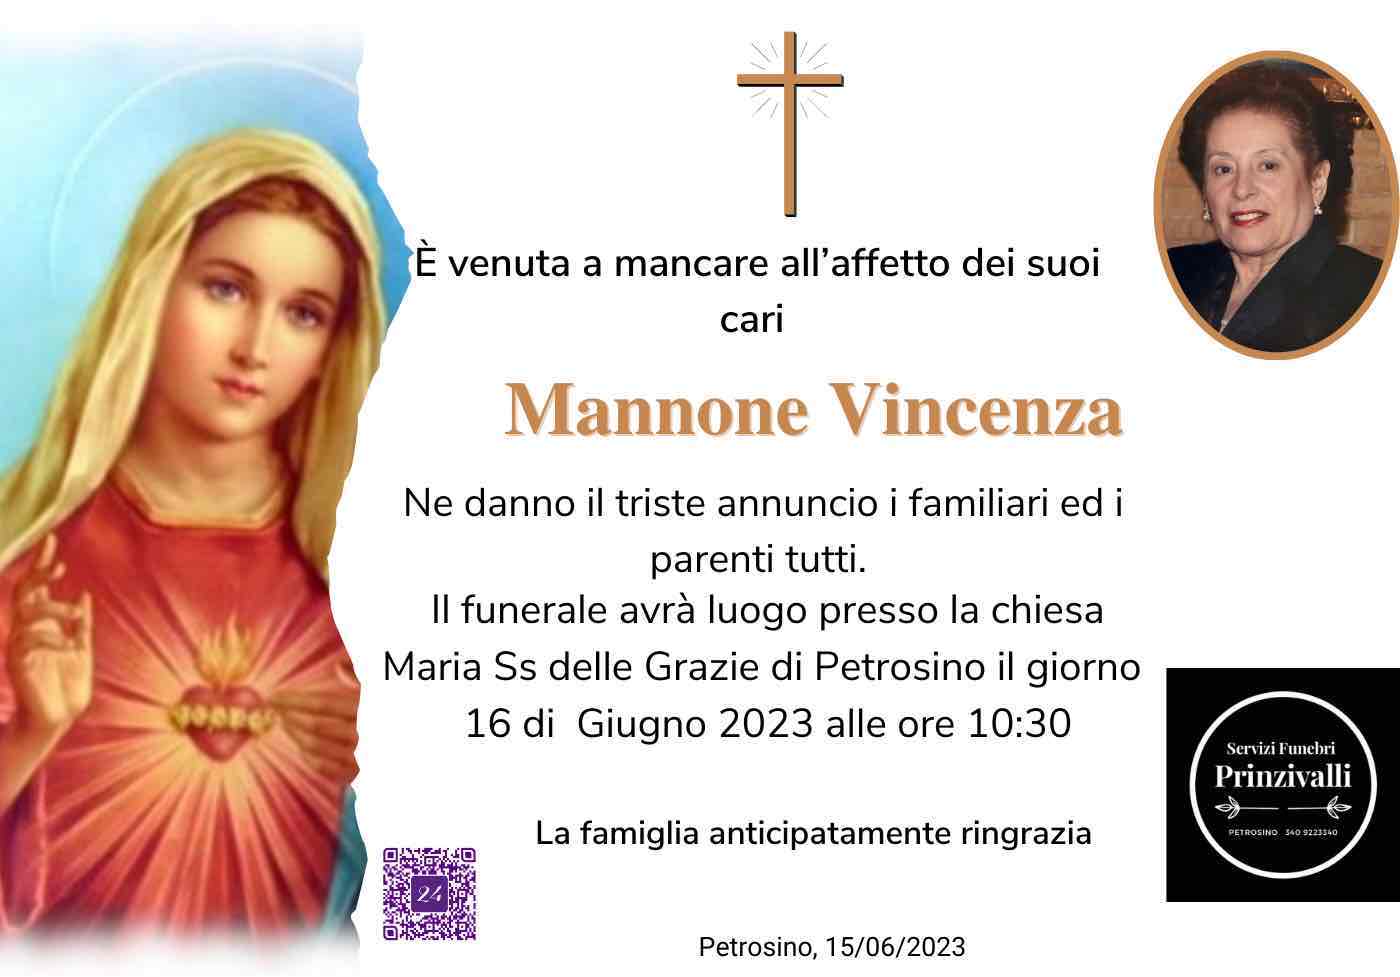 Vincenza Mannone